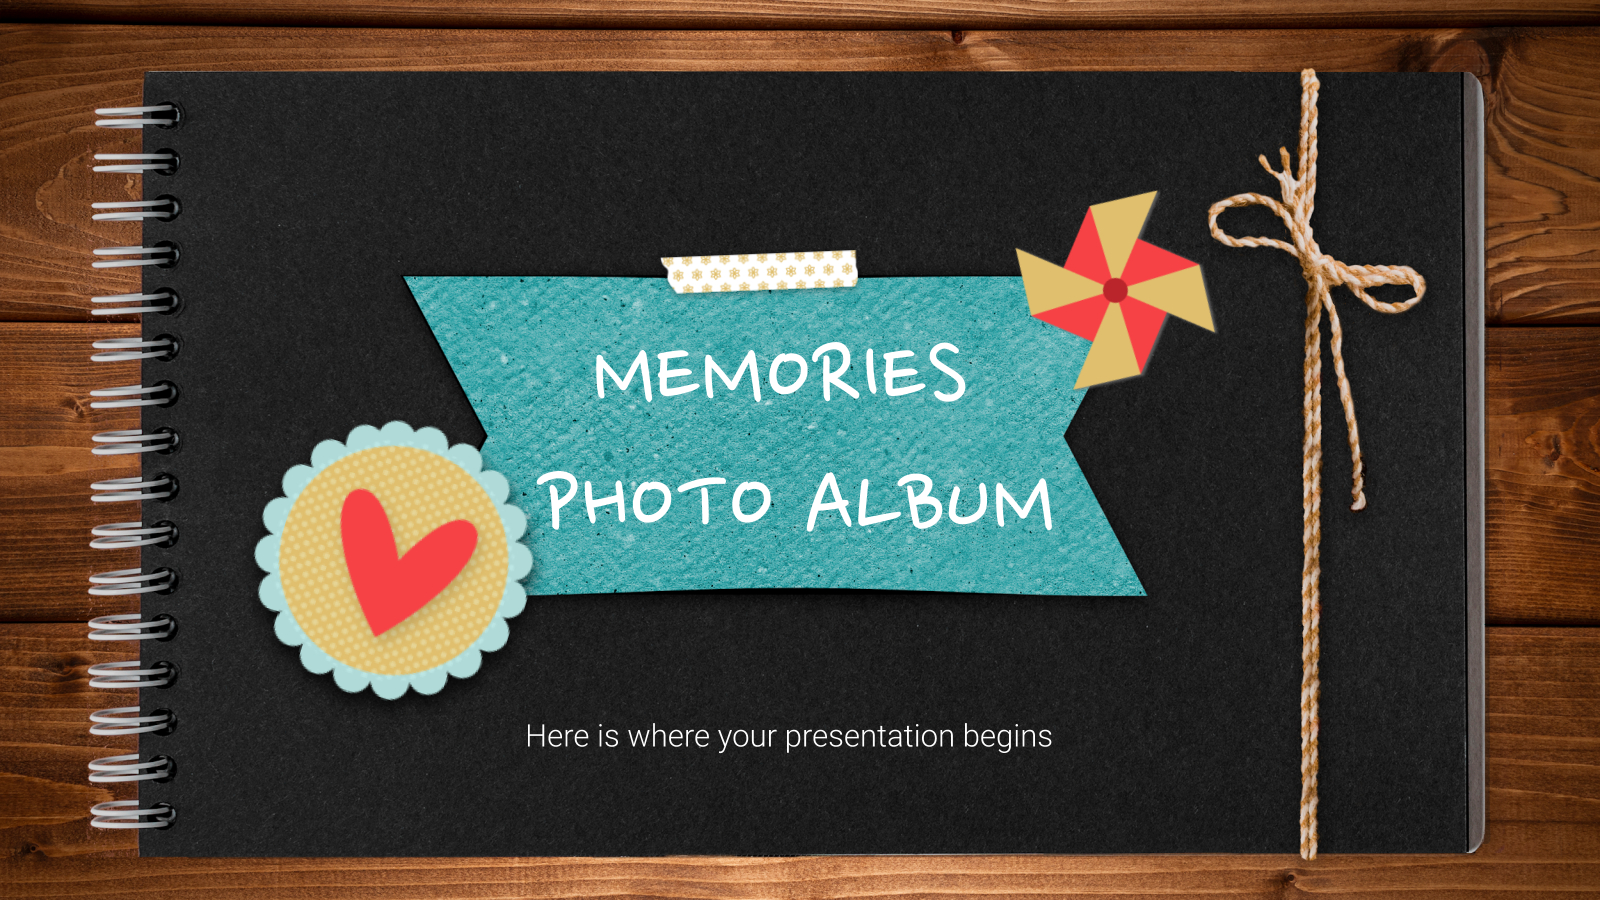 Memories Photo Album Google Slides Theme And Powerpoint Template Throughout Powerpoint Photo Album Template